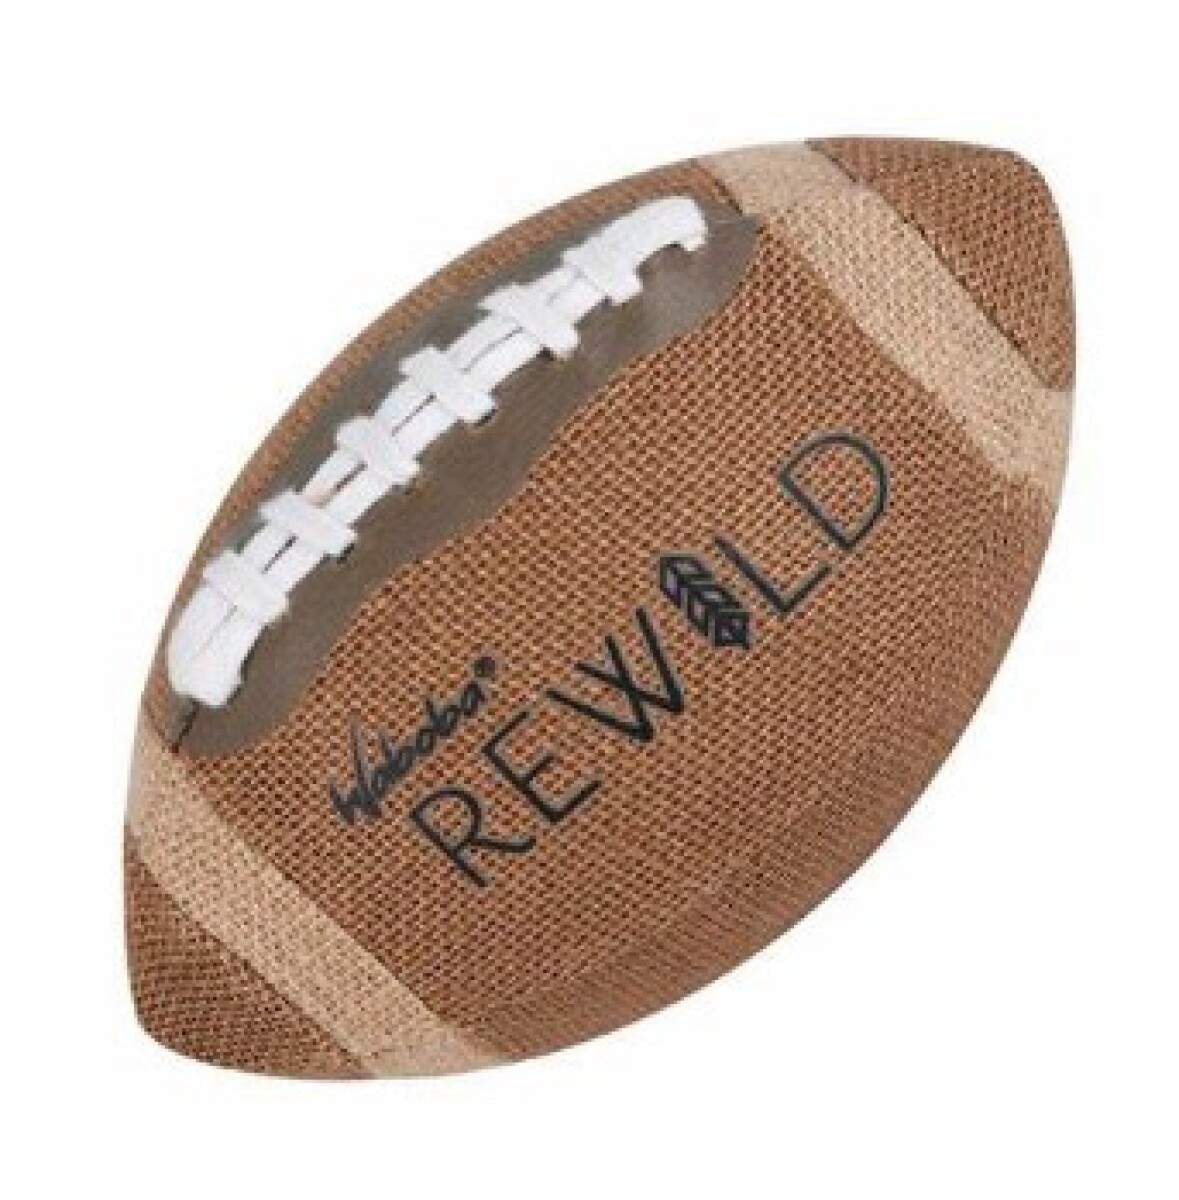 Rewild 9" Football 